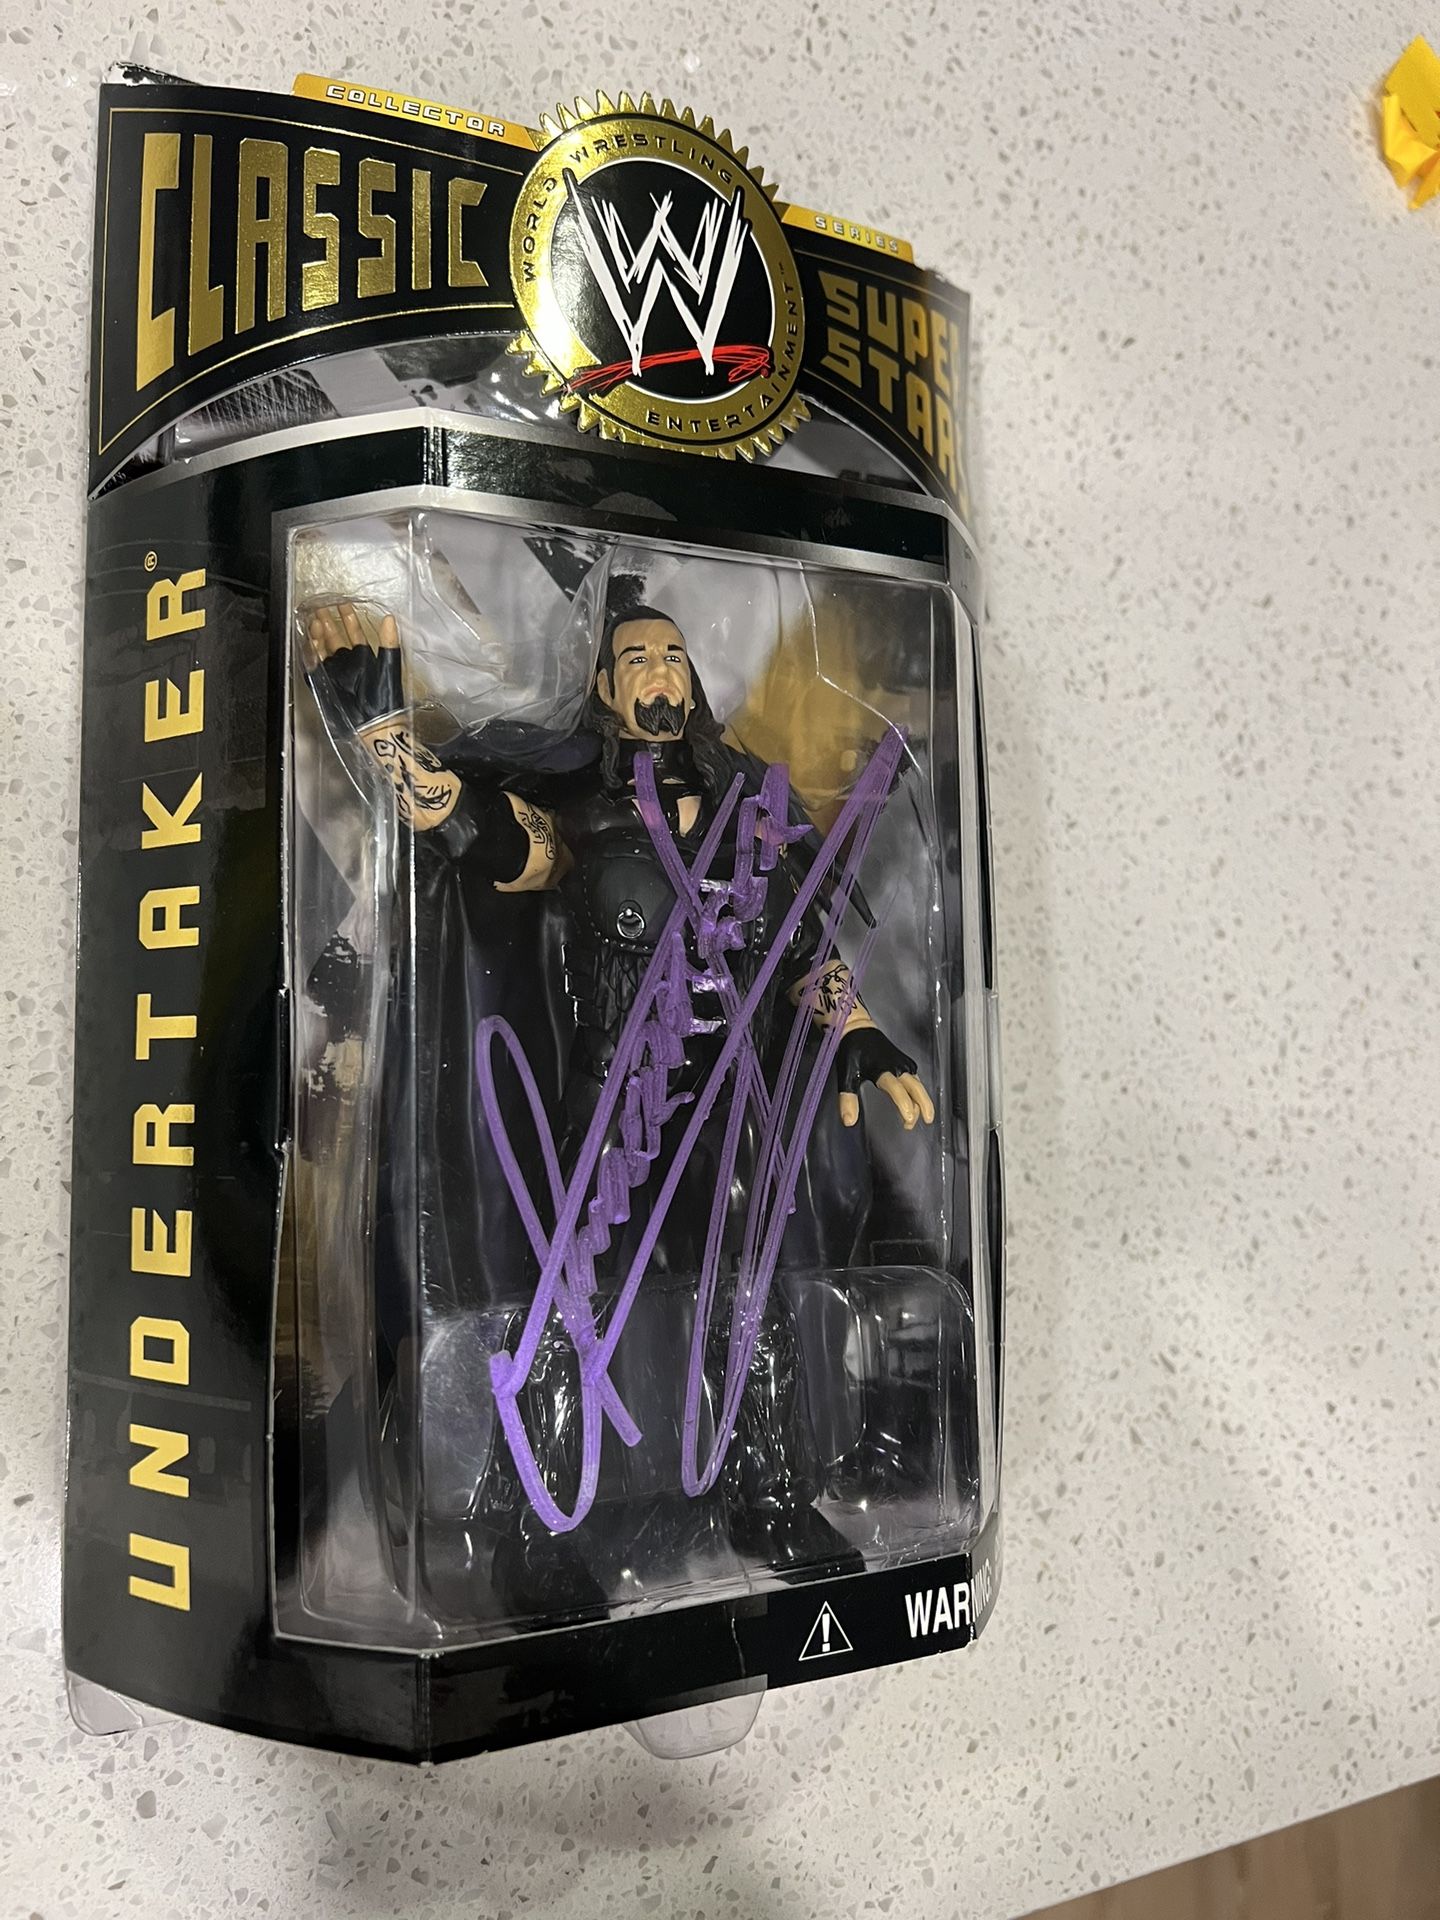 Autographed Classic super Stars Action figure “Undertaker”